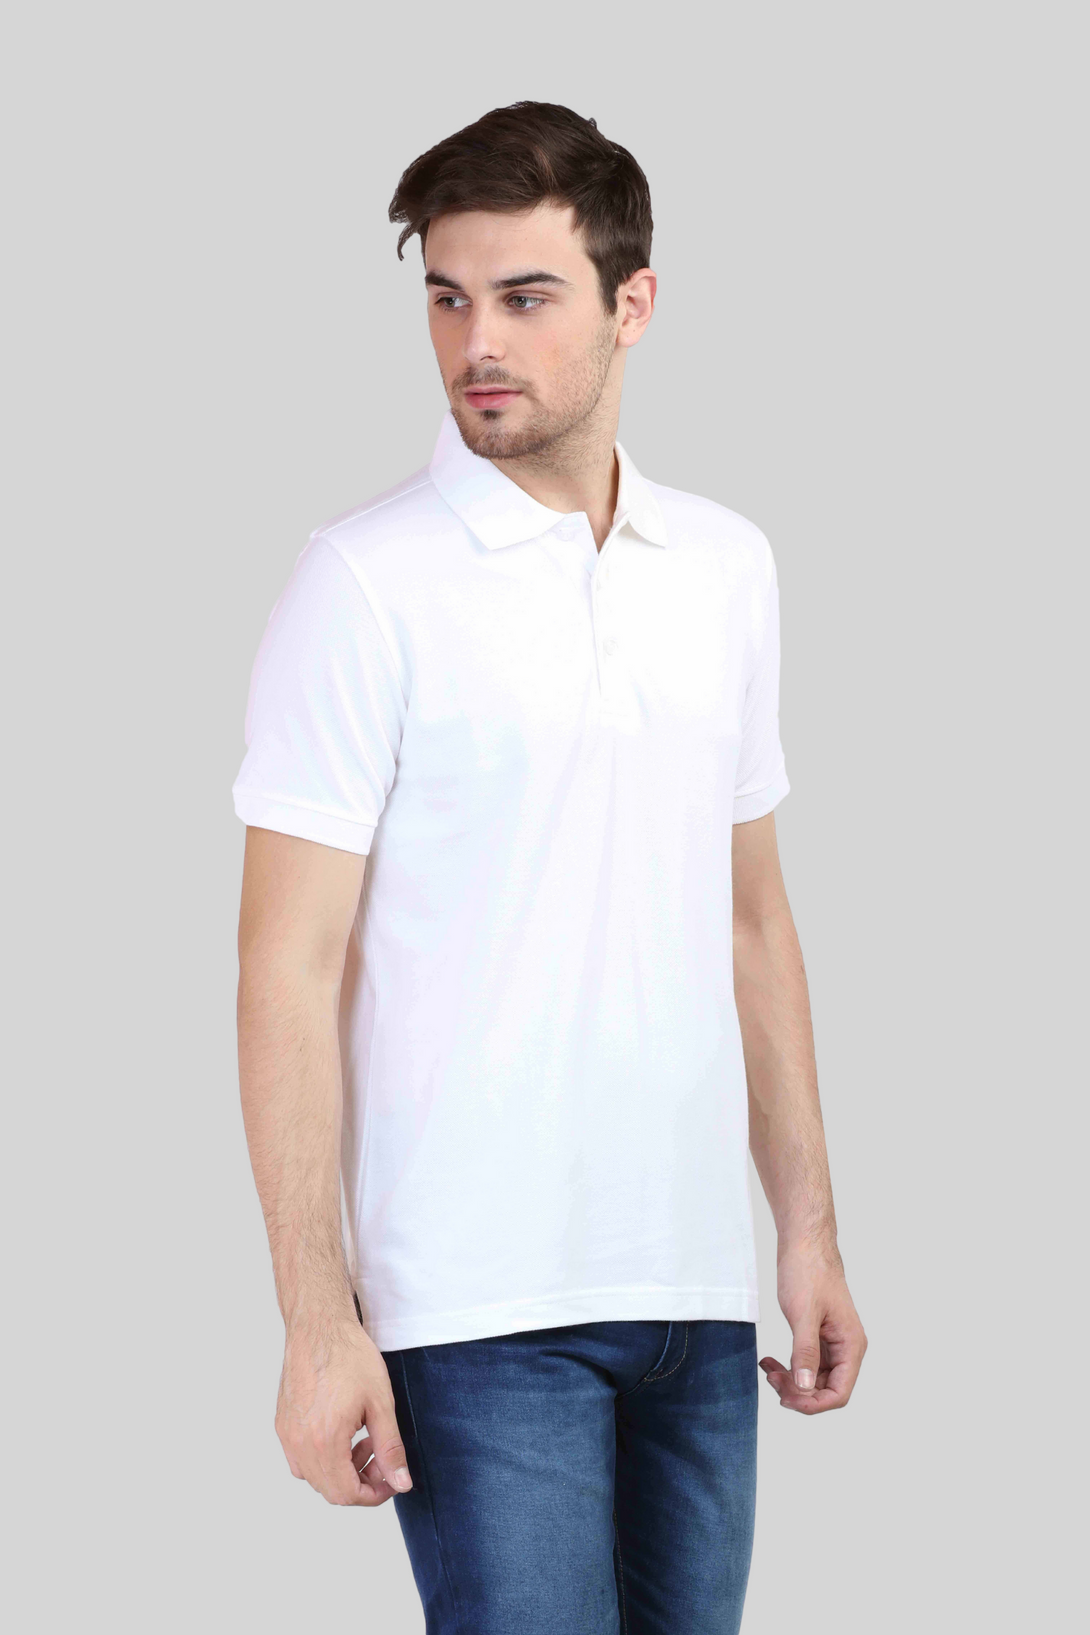 White Polo T-Shirt For Men - WowWaves - 2